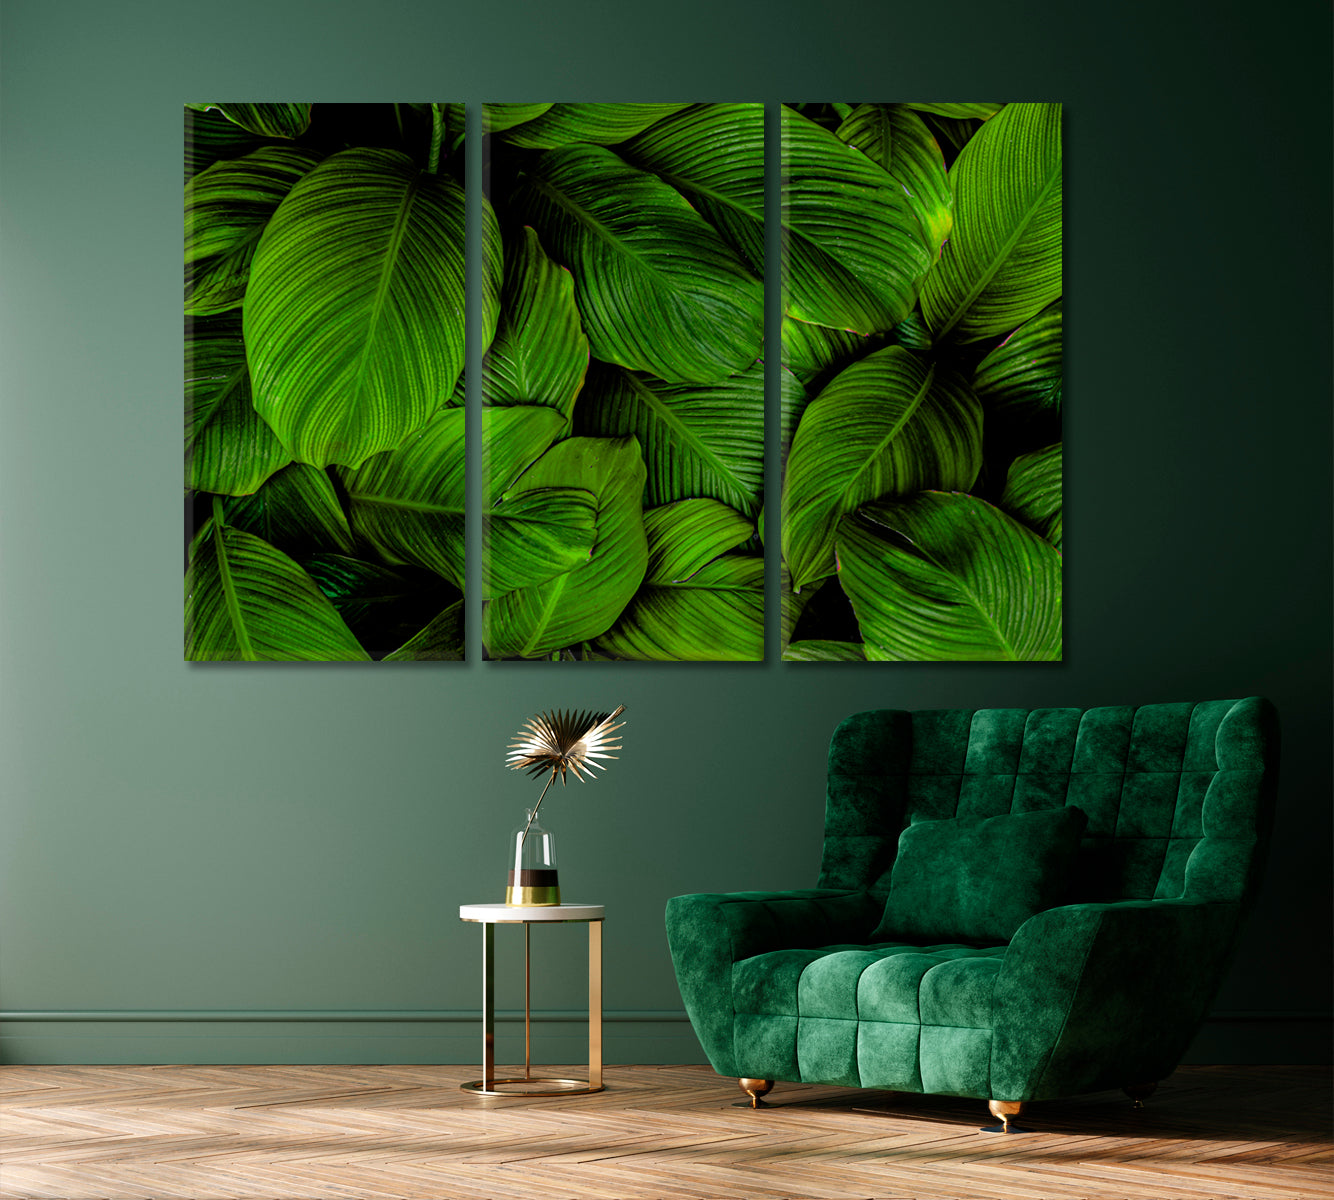 Green Tropical Leaf Canvas Print-Canvas Print-CetArt-1 Panel-24x16 inches-CetArt